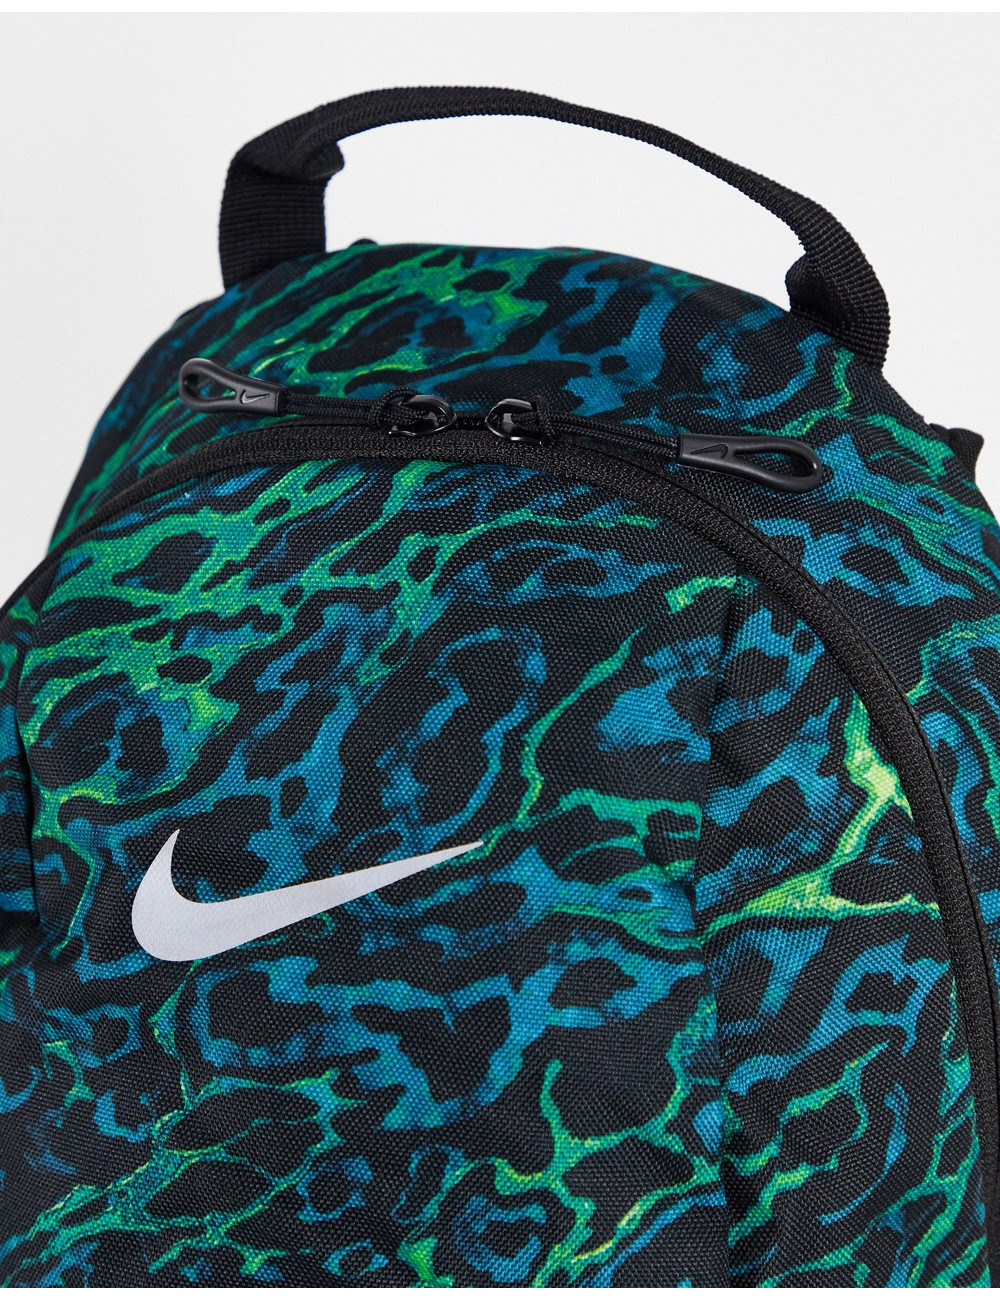 Nike Race Day 13L backpack...